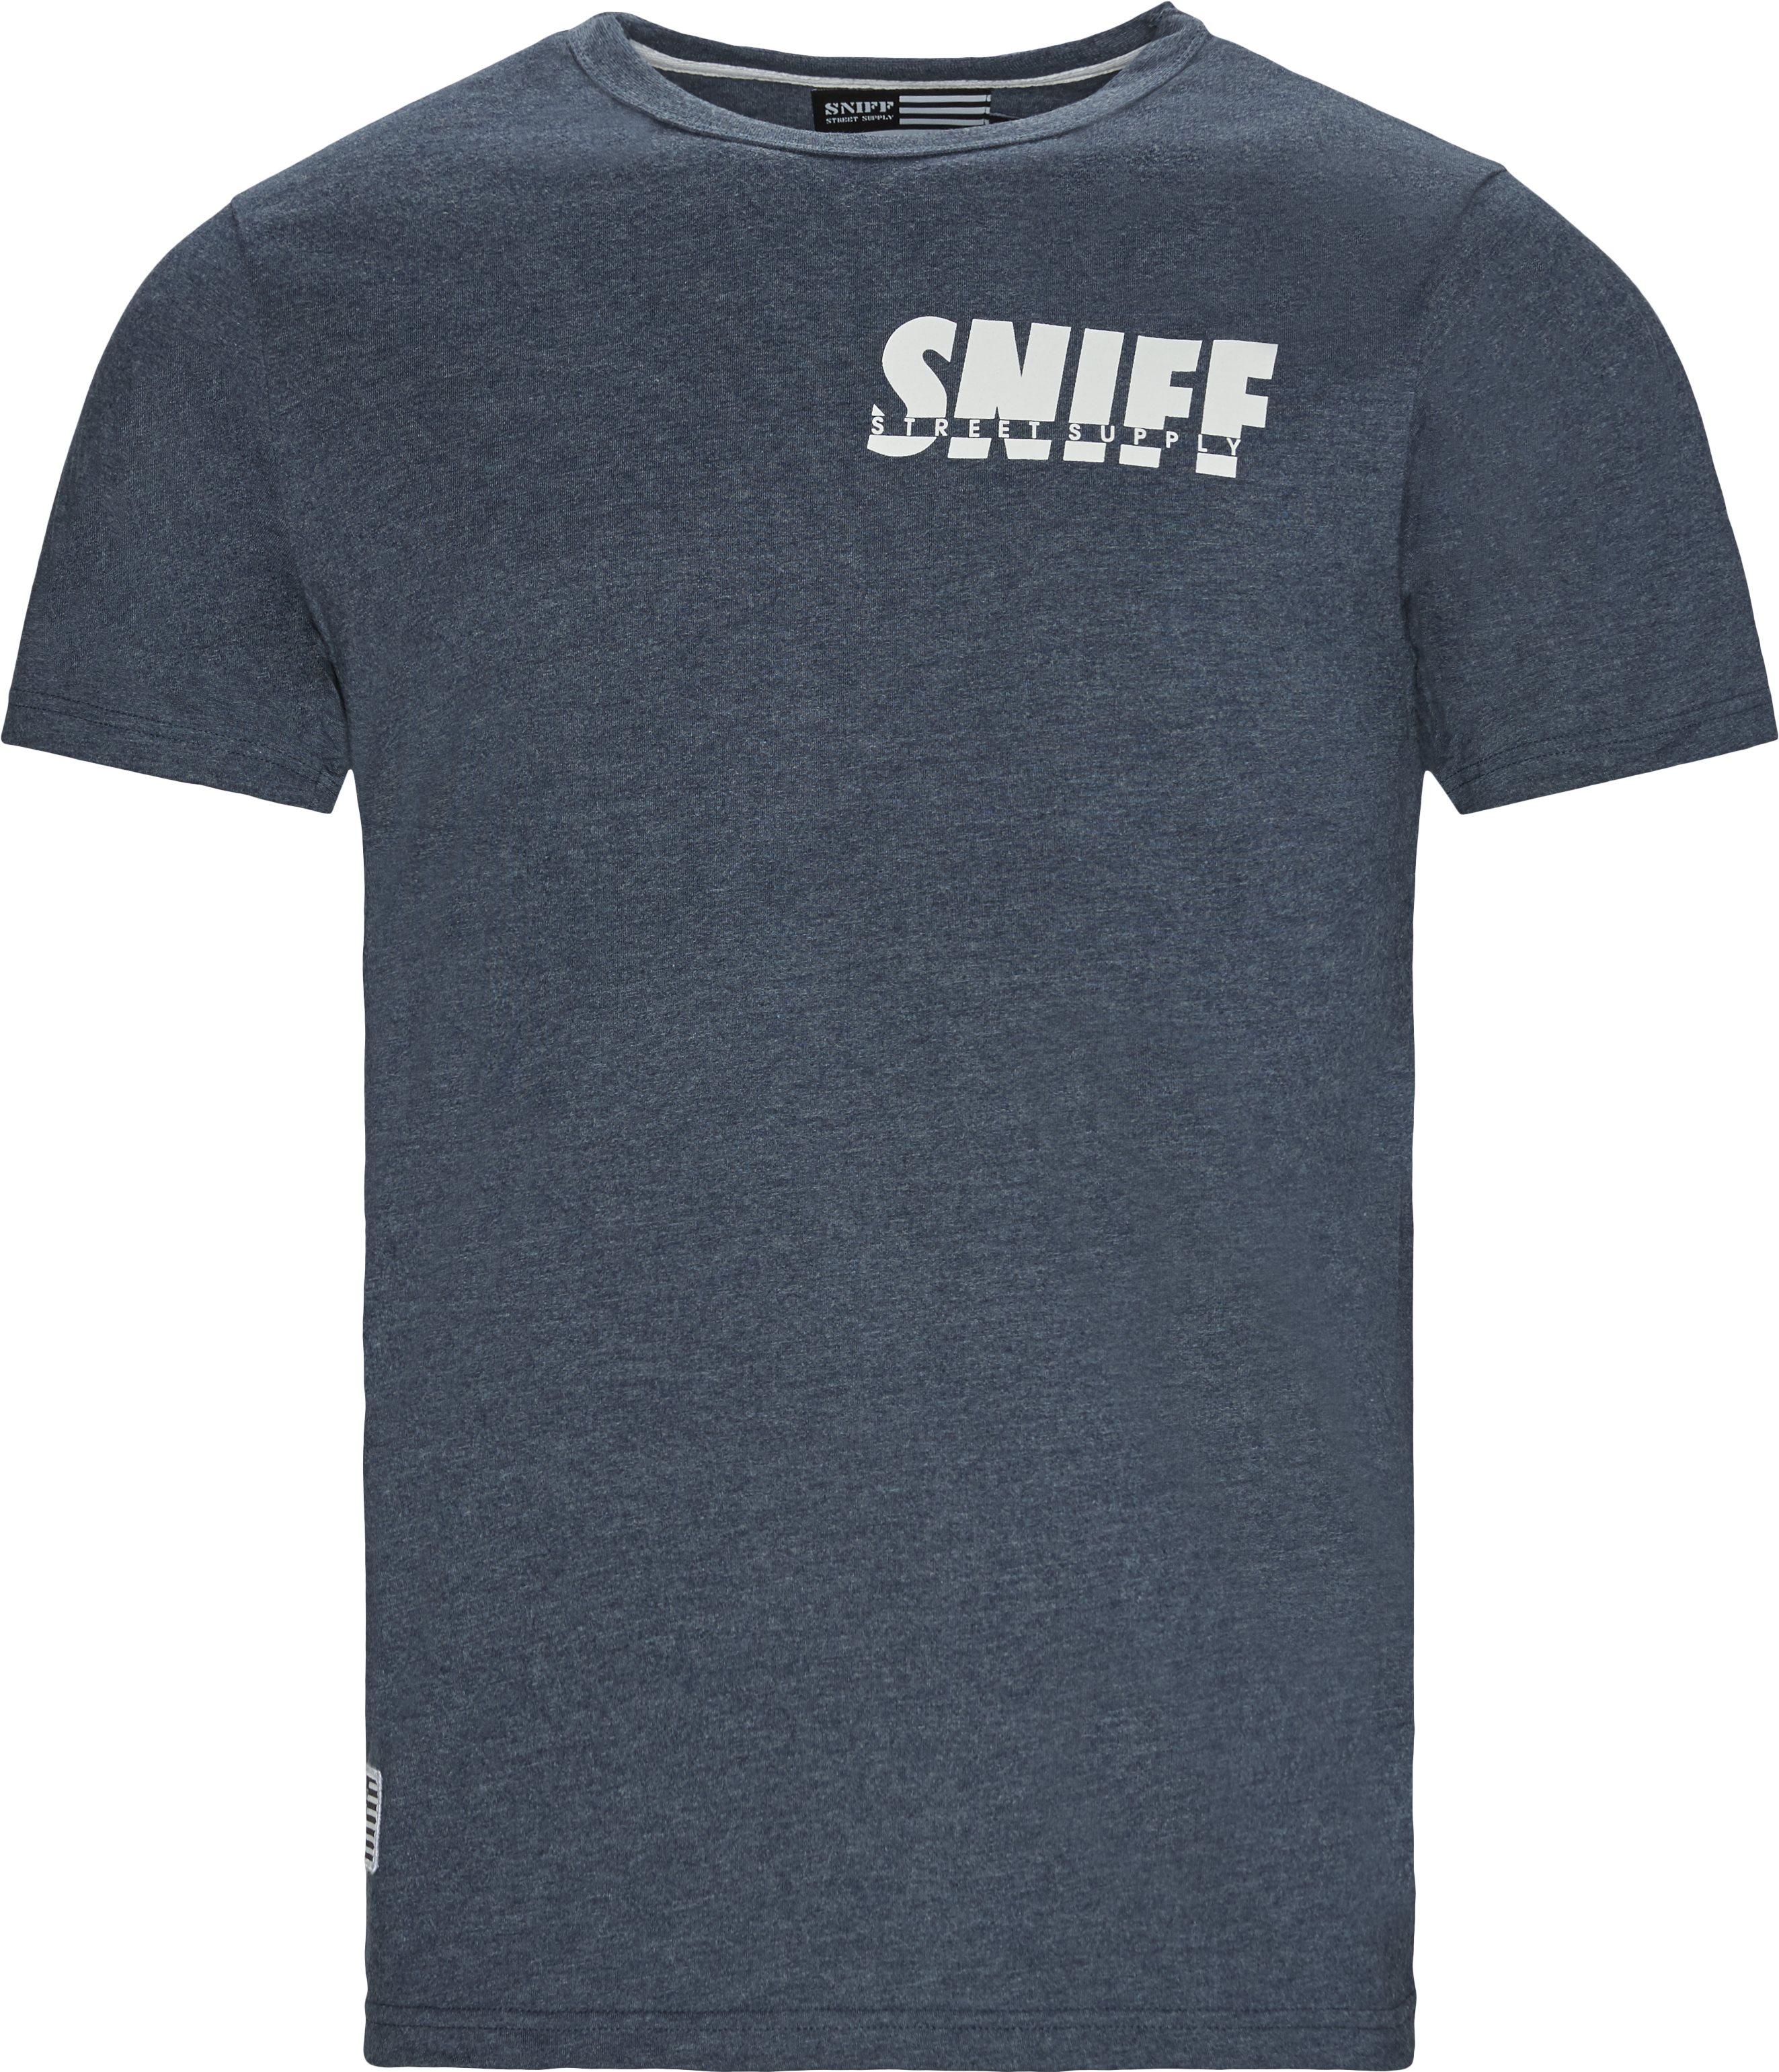 Smokey Tee - T-shirts - Regular fit - Denim